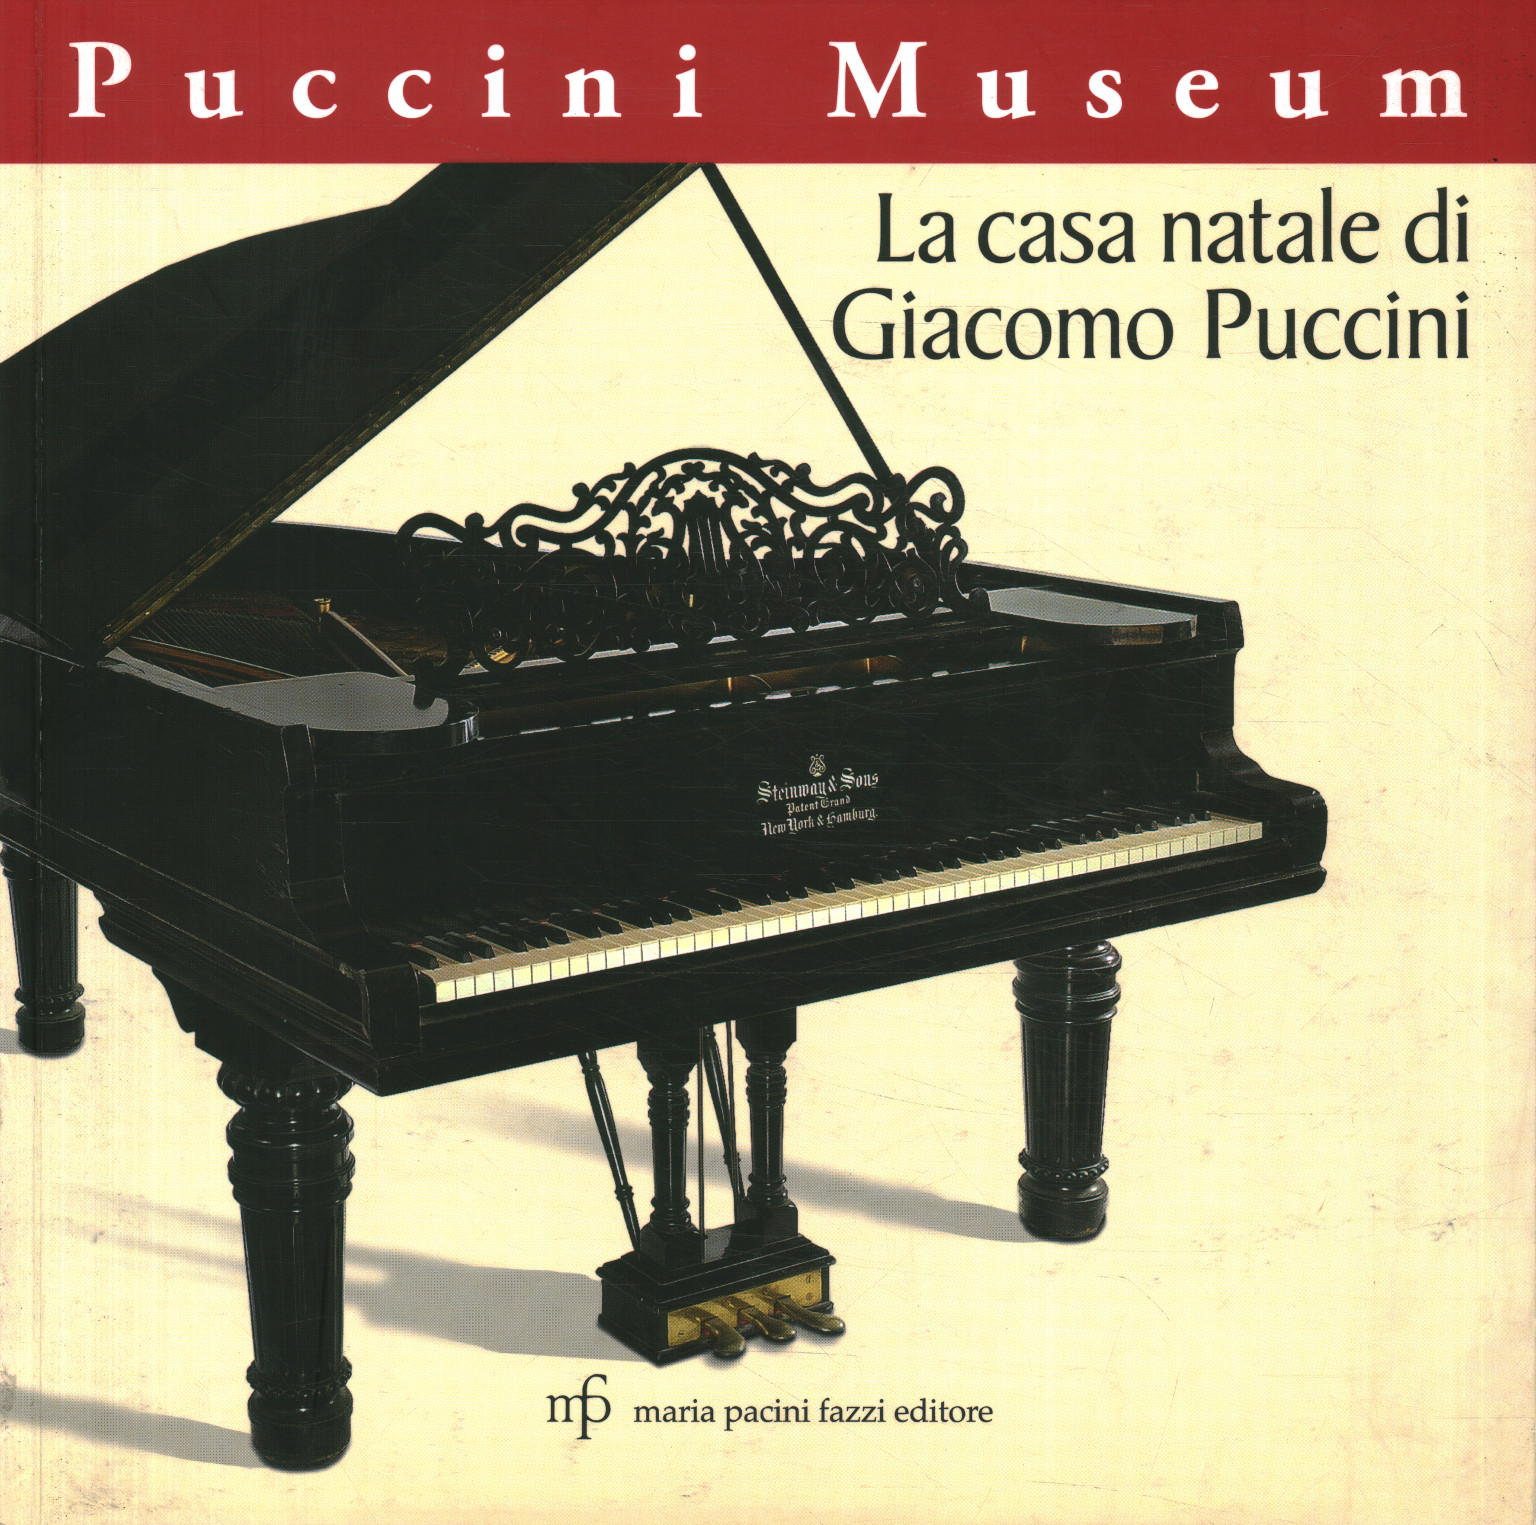 Puccini Museum. Giac's birthplace